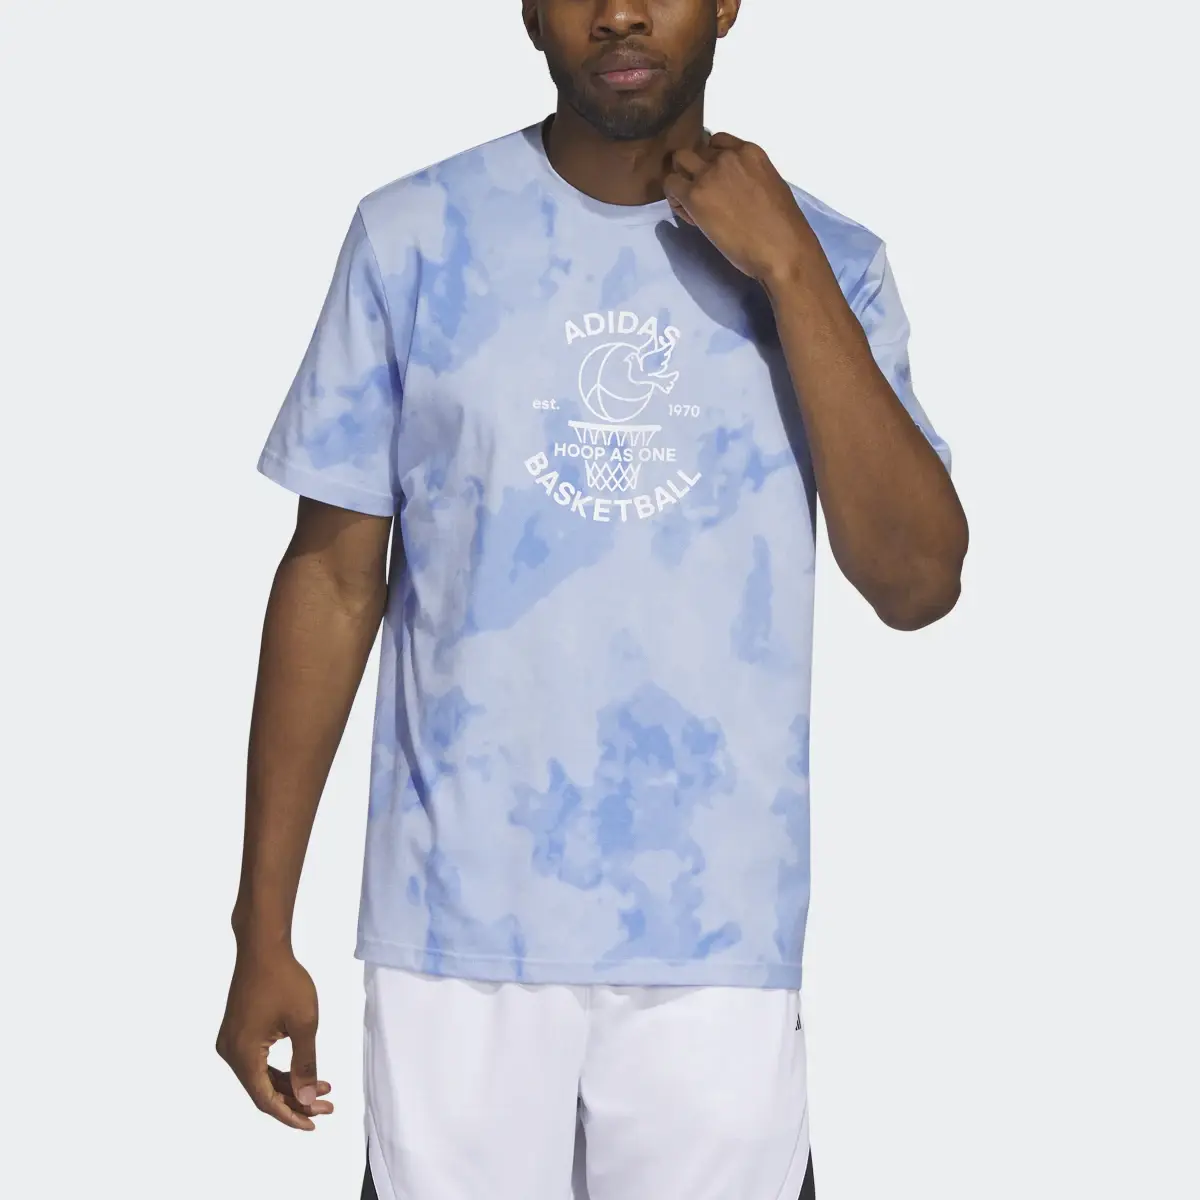 Adidas Worldwide Hoops Basketball Graphic T-Shirt. 1